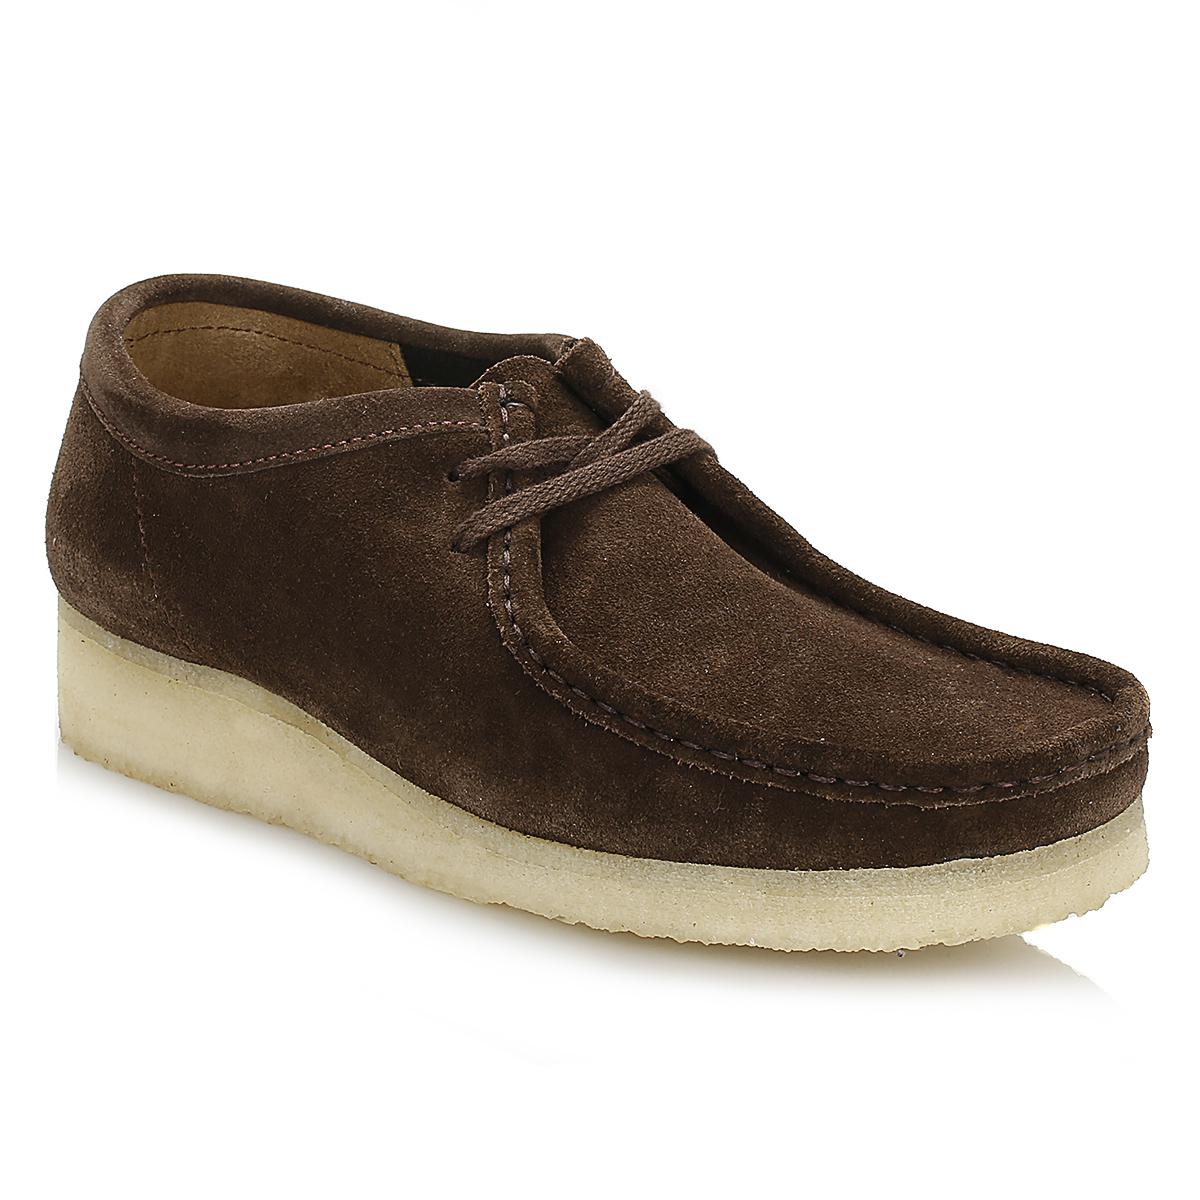 Clarks Originals Mens Dark Brown Wallabee Suede Shoes for Men - Lyst